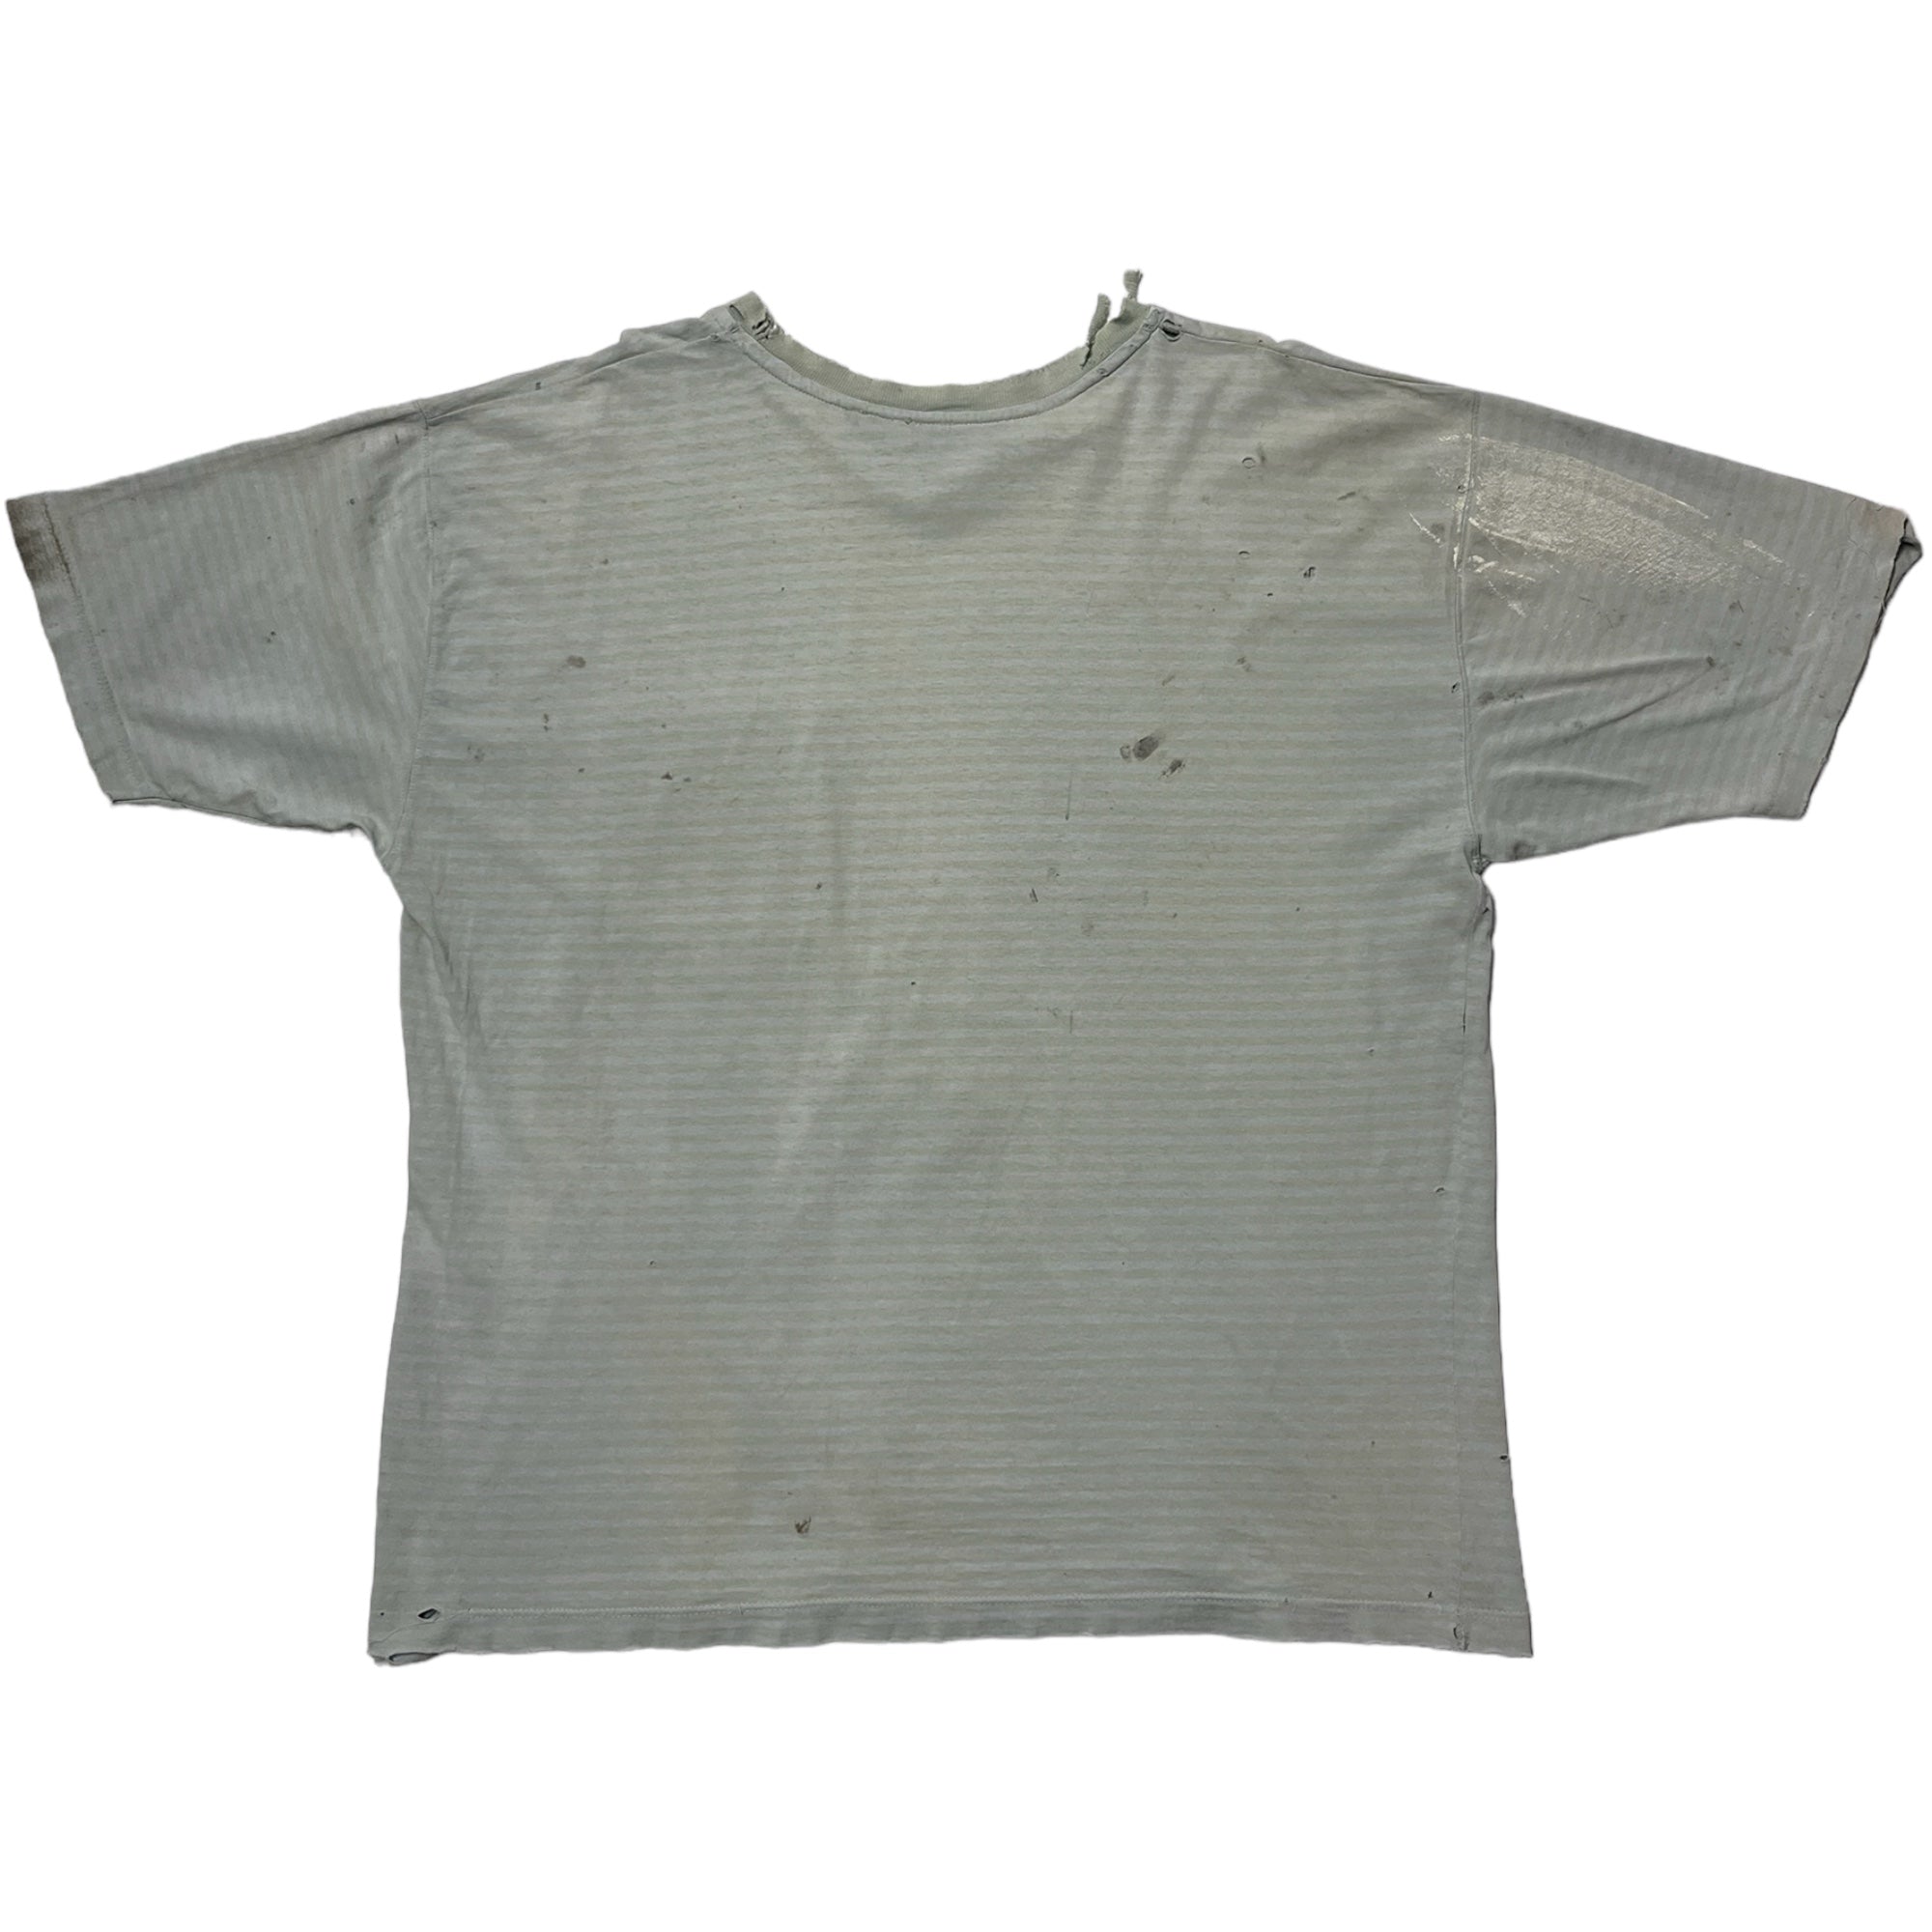 1990s Thrashed Pocket T-Shirt - Faded Sky Blue/Green - L/XL